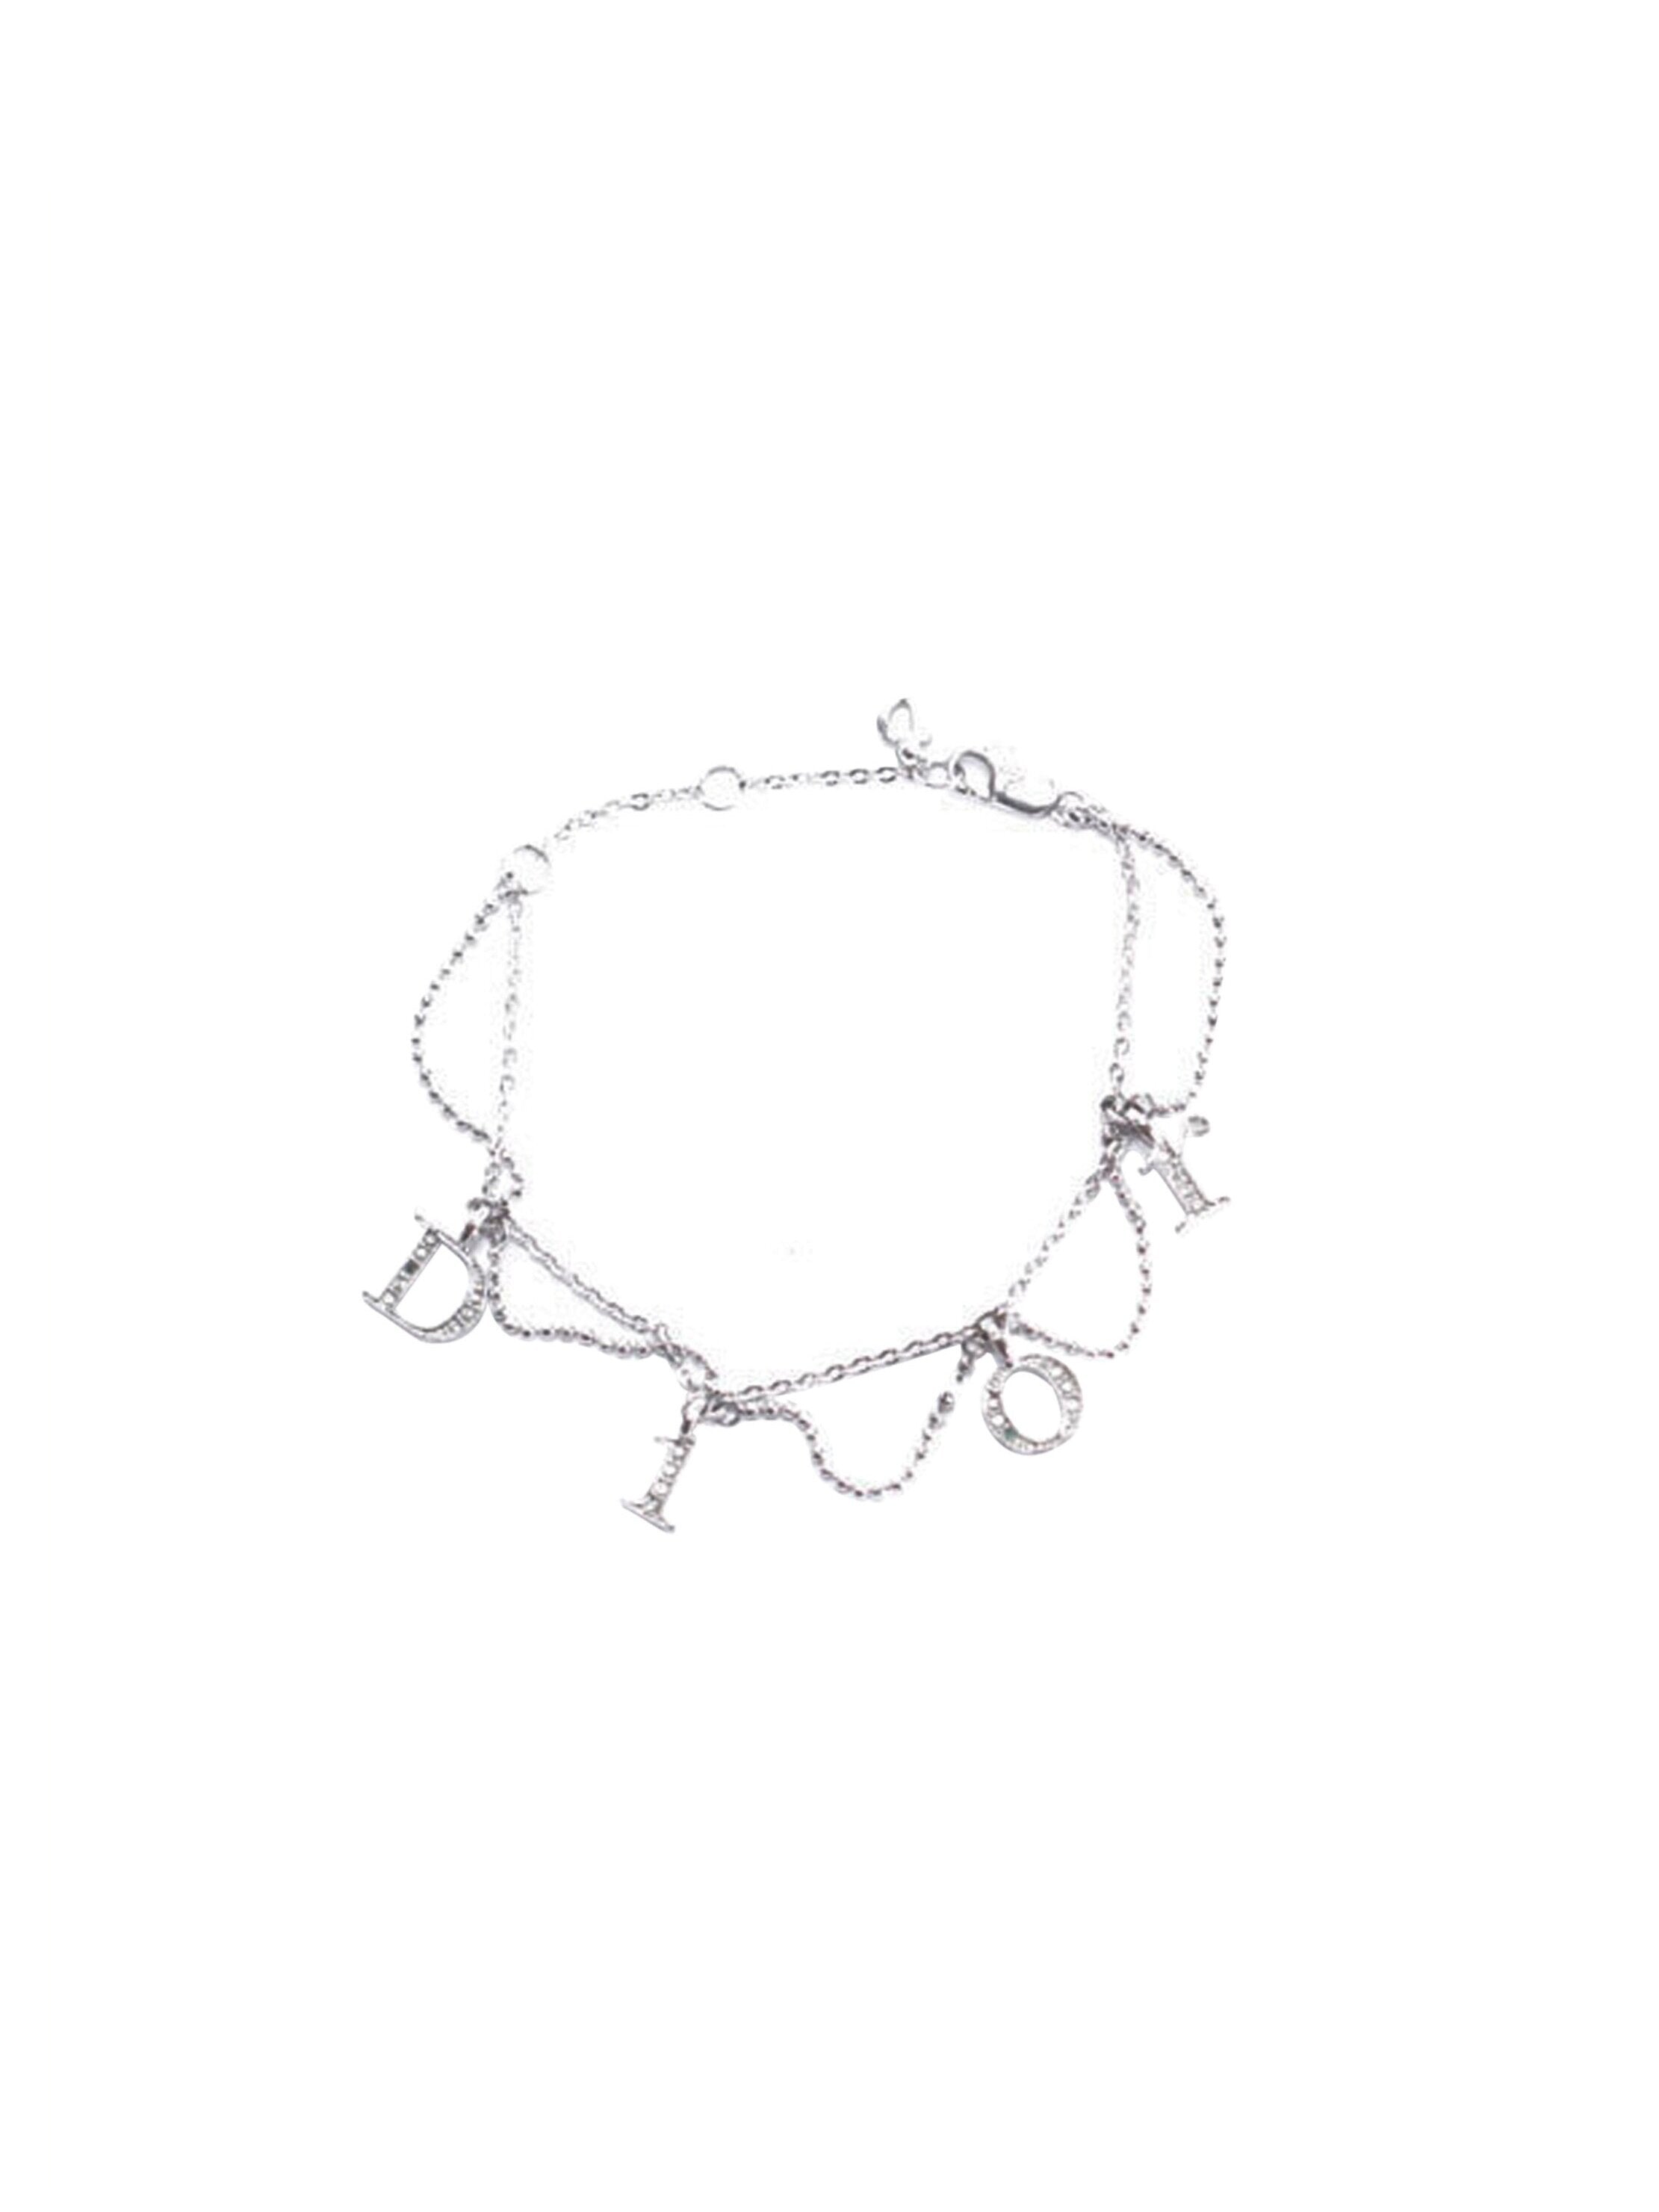 Christian Dior 2000s Silver Chain Charm Bracelet